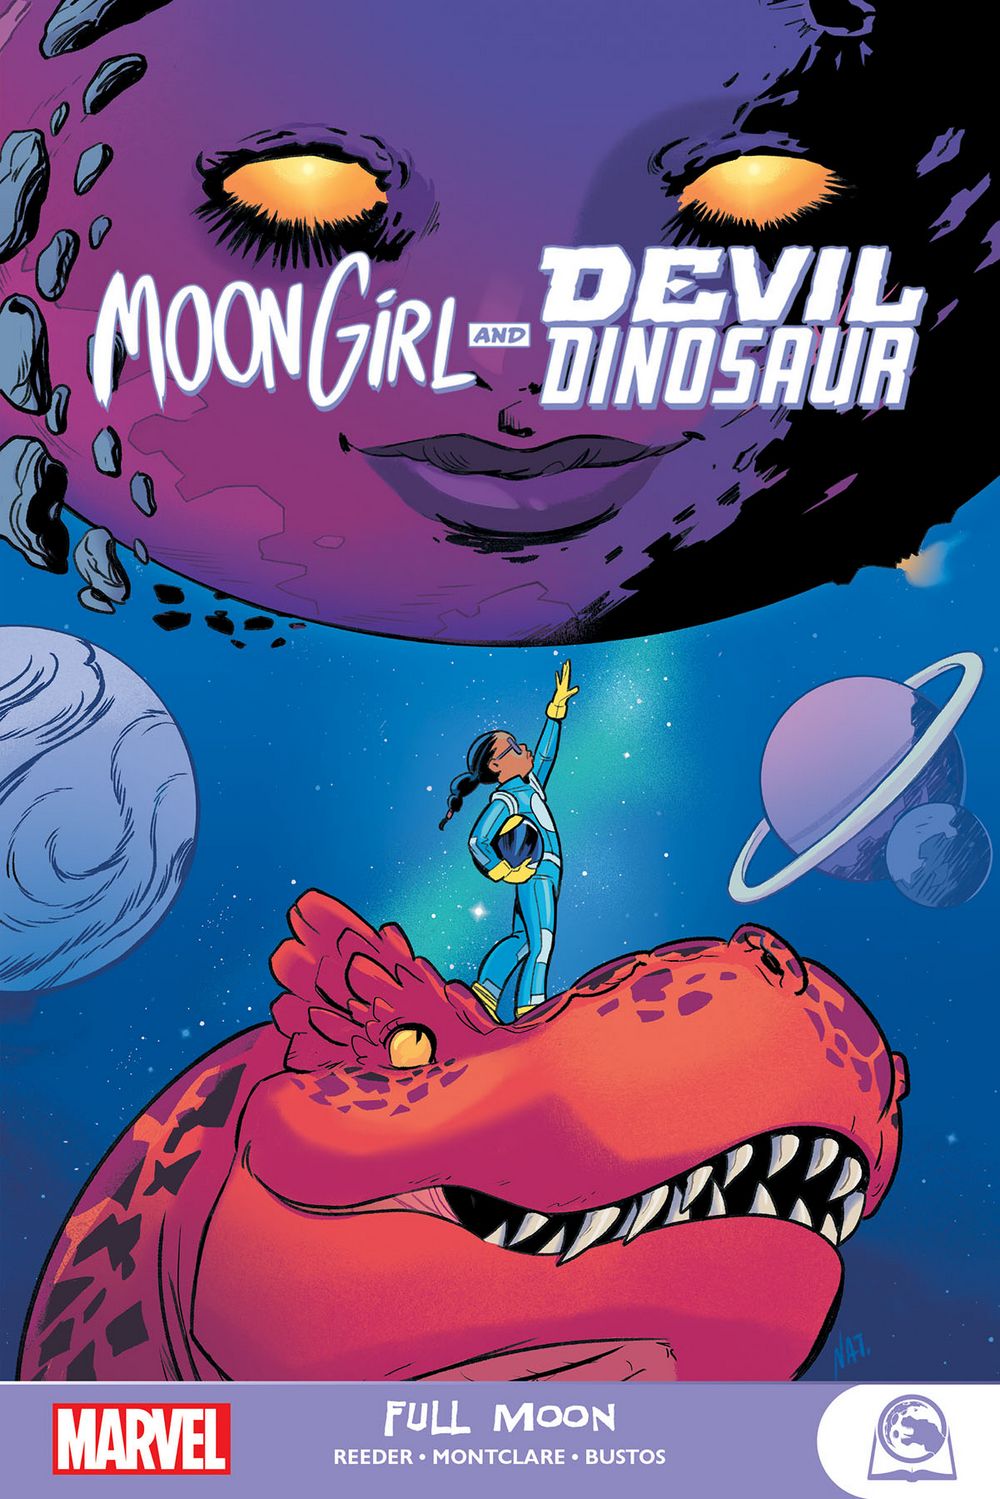 Moon Girl and Devil Dinosaur GN VOL 02 Full Moon